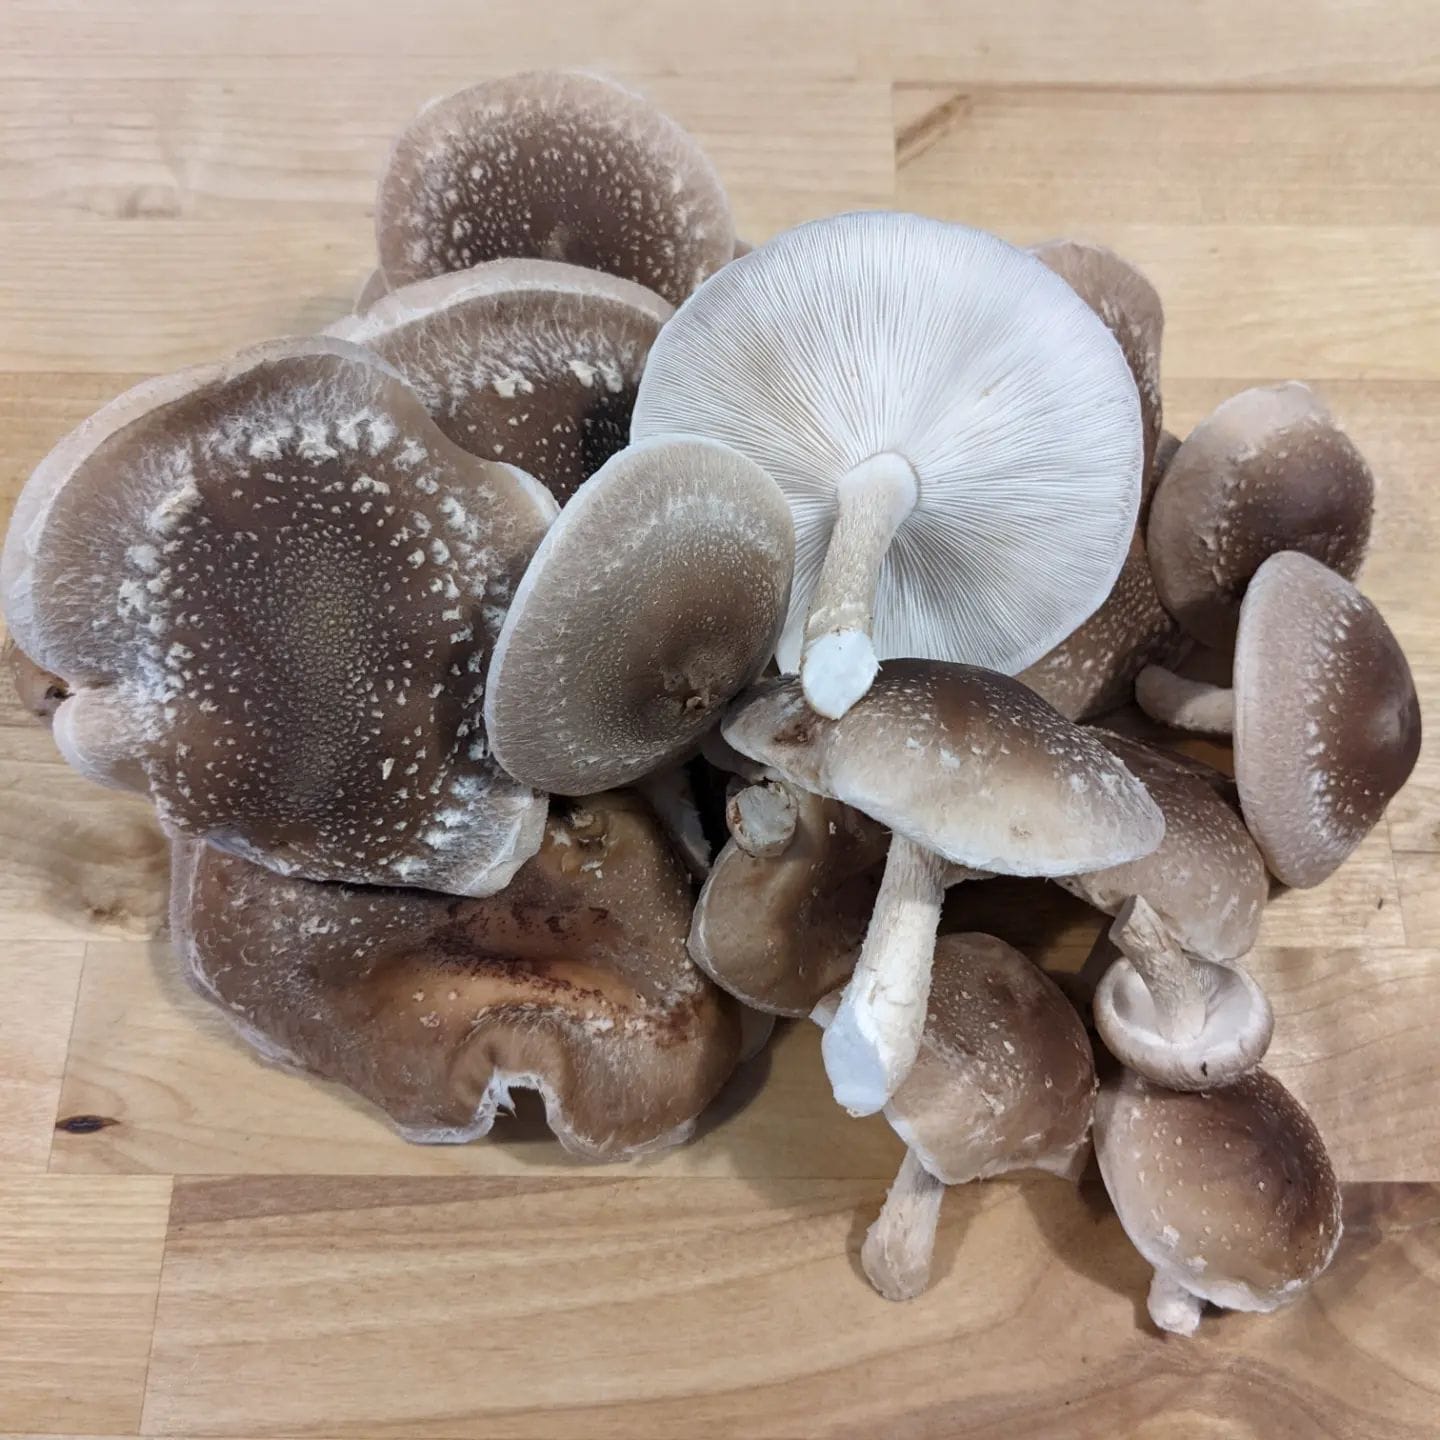 A pile of fresh Shiitake mushrooms.